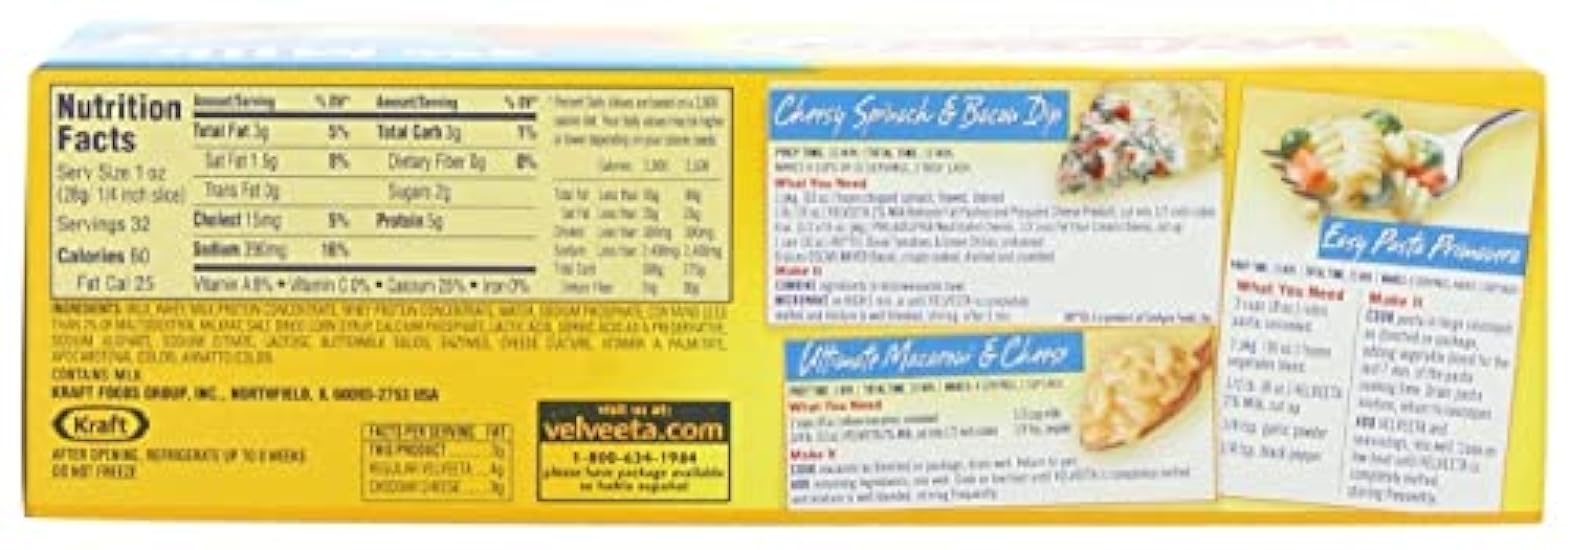 Kraft Velveeta with 2% Milk Cheese, 32 Oz (2pk) by Velveeta 316353516